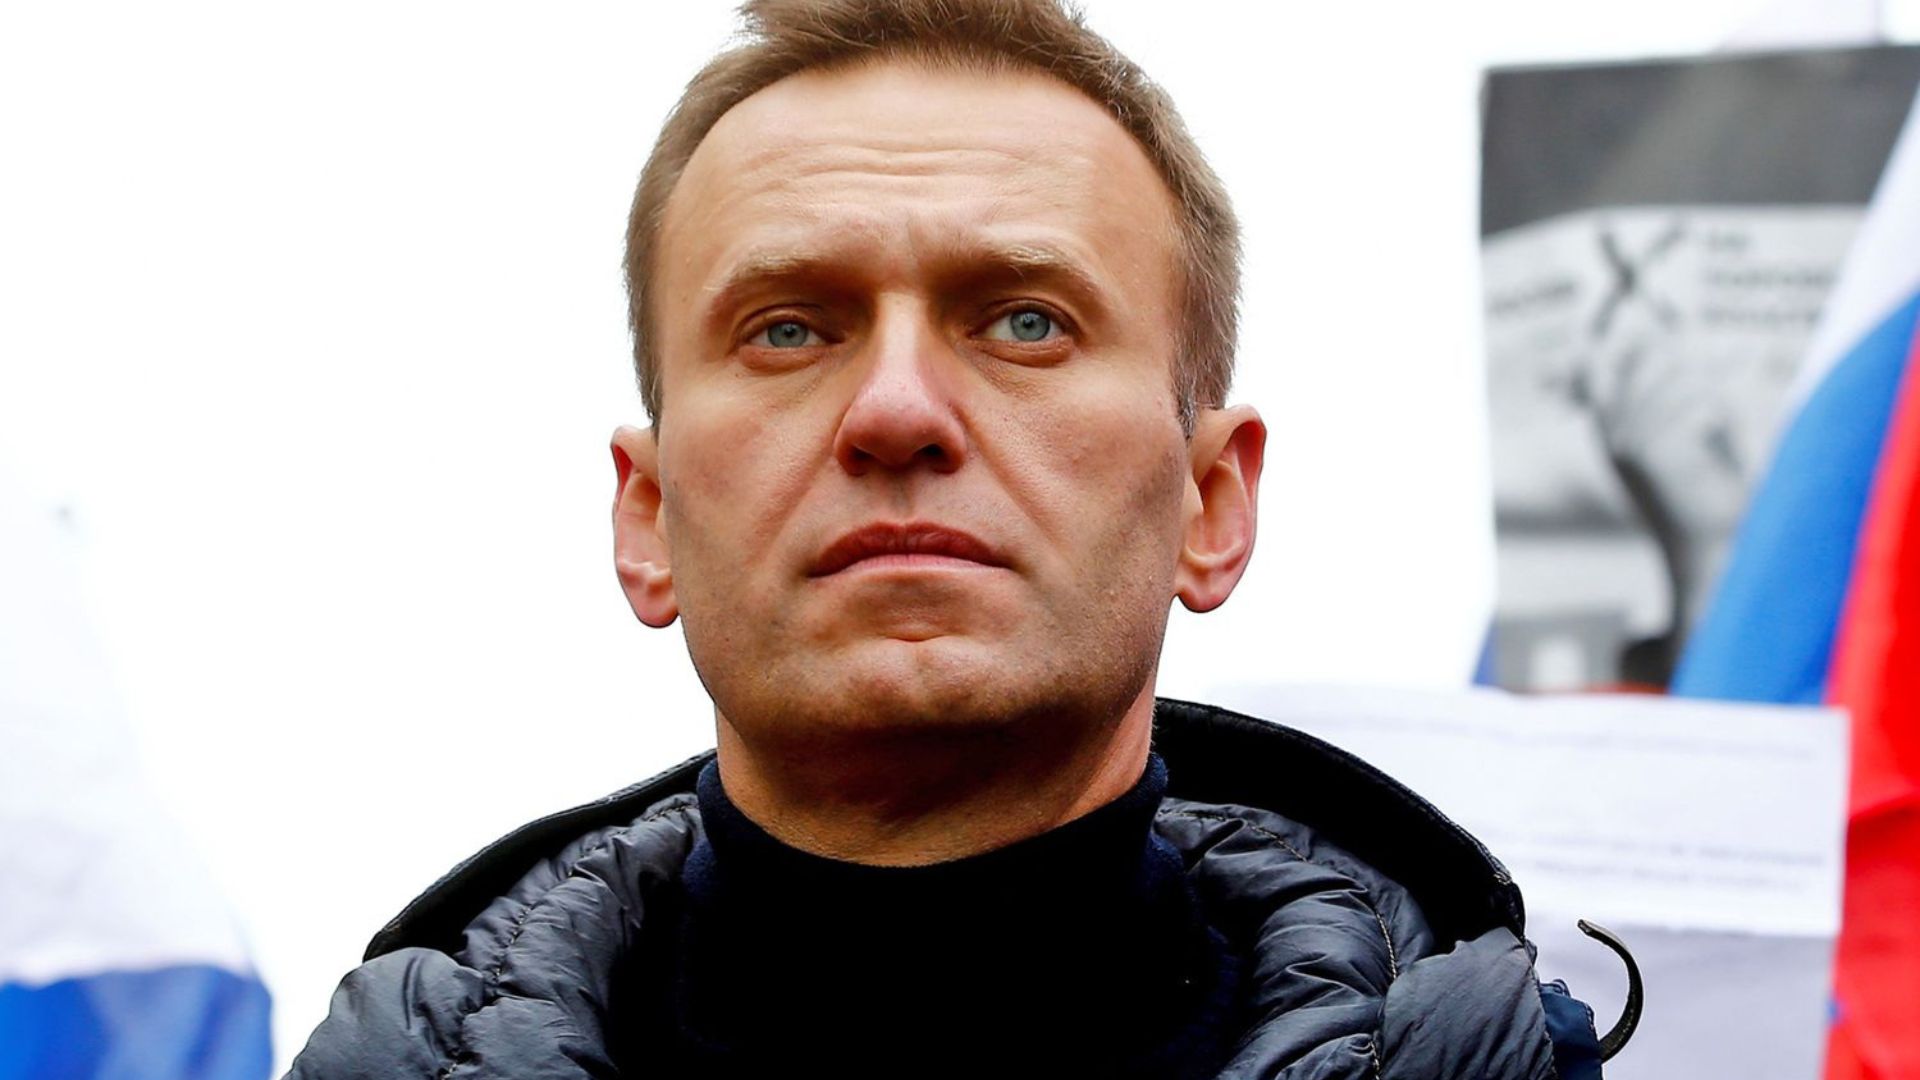 Russian opposition leader Alexei Navalny dies in prison: Kremlin blamed